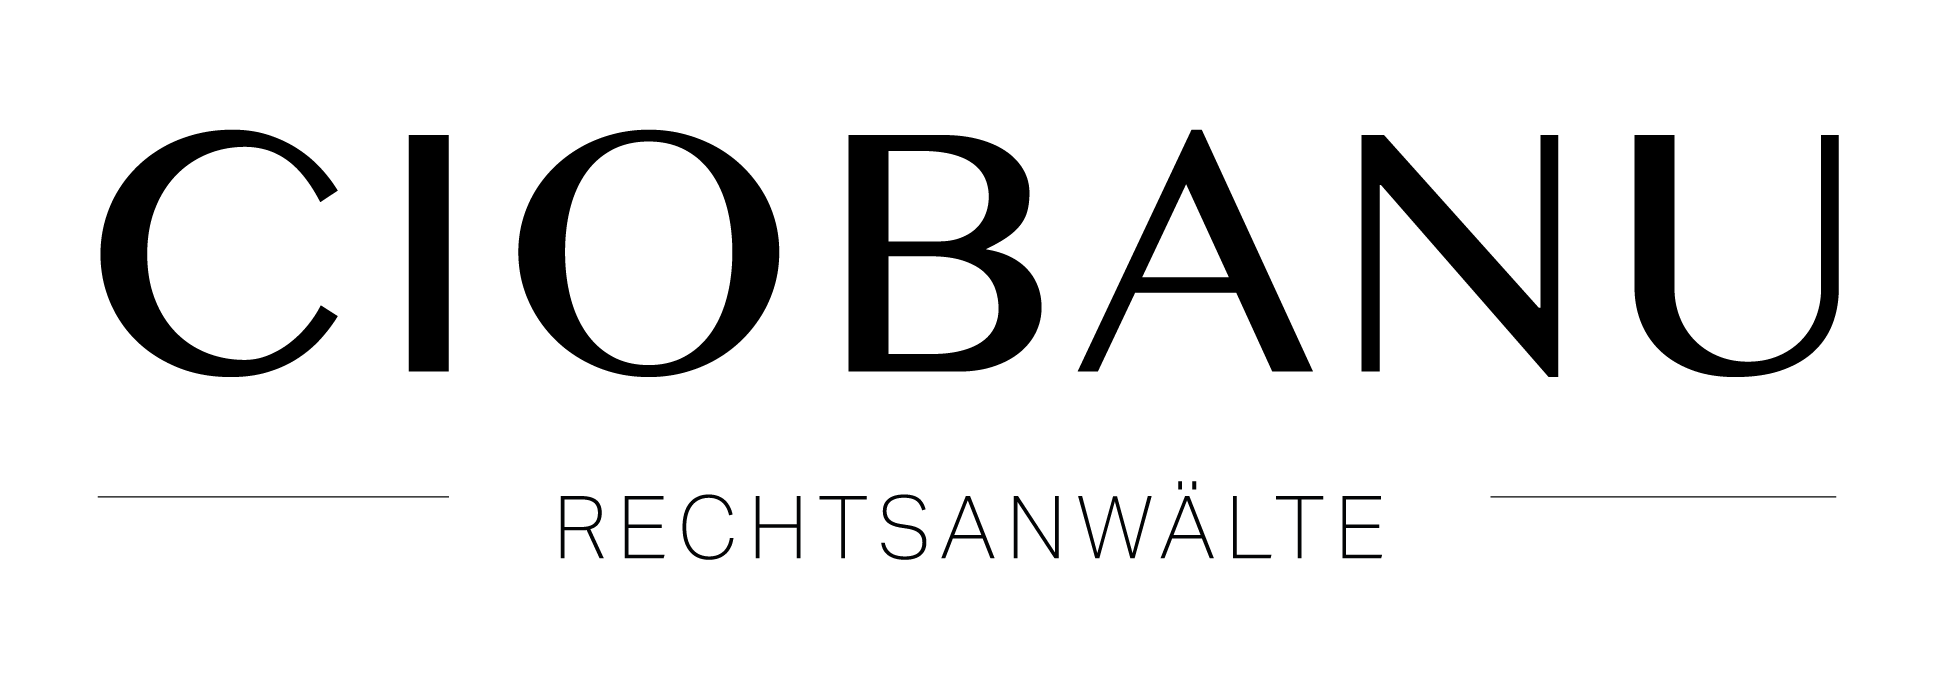 Ciobanu Rechtsanwälte Hannover - Logo Schwarz